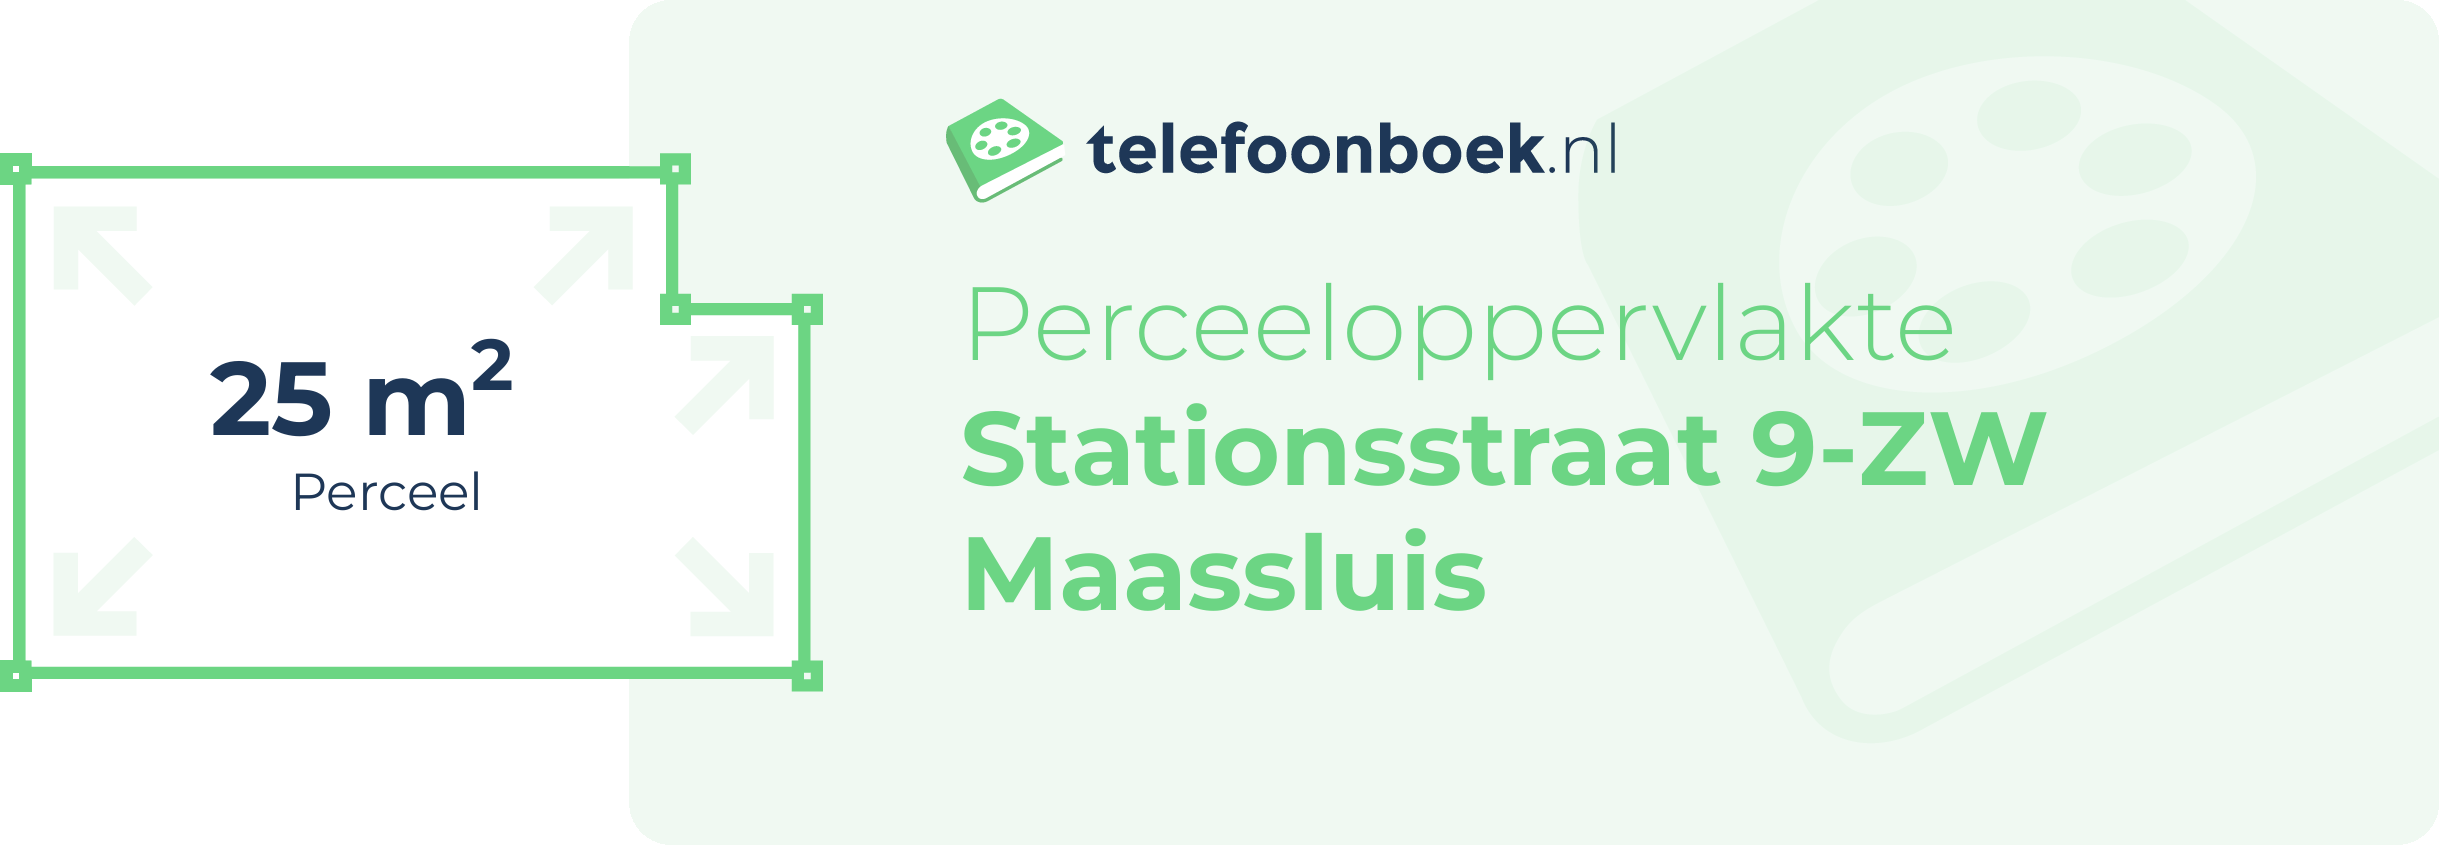 Perceeloppervlakte Stationsstraat 9-ZW Maassluis